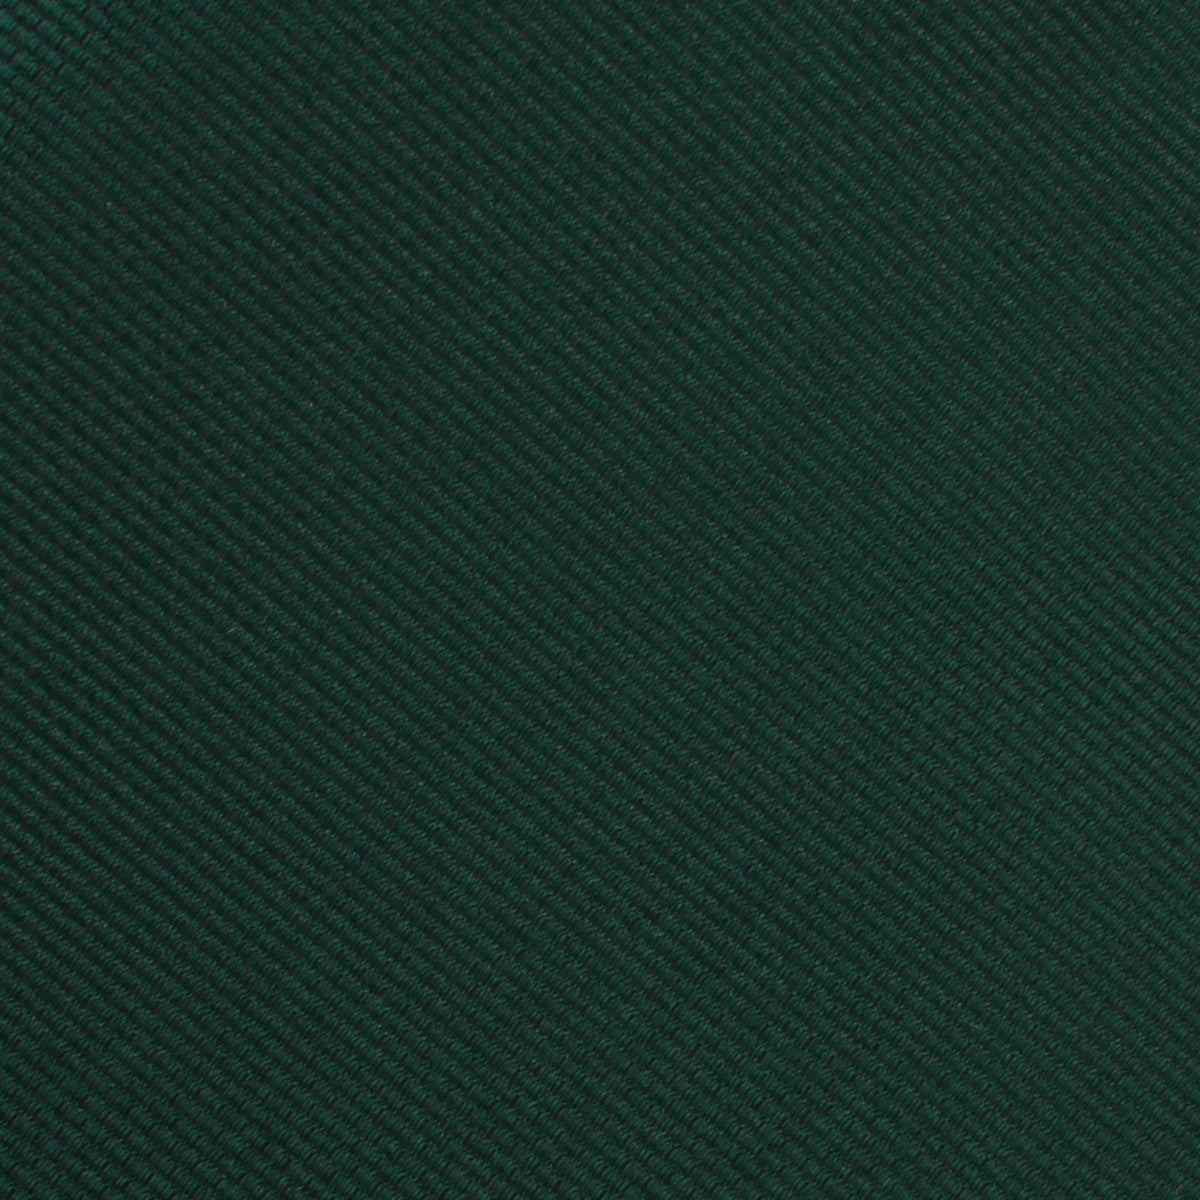 Dark Green Weave Skinny Tie Fabric